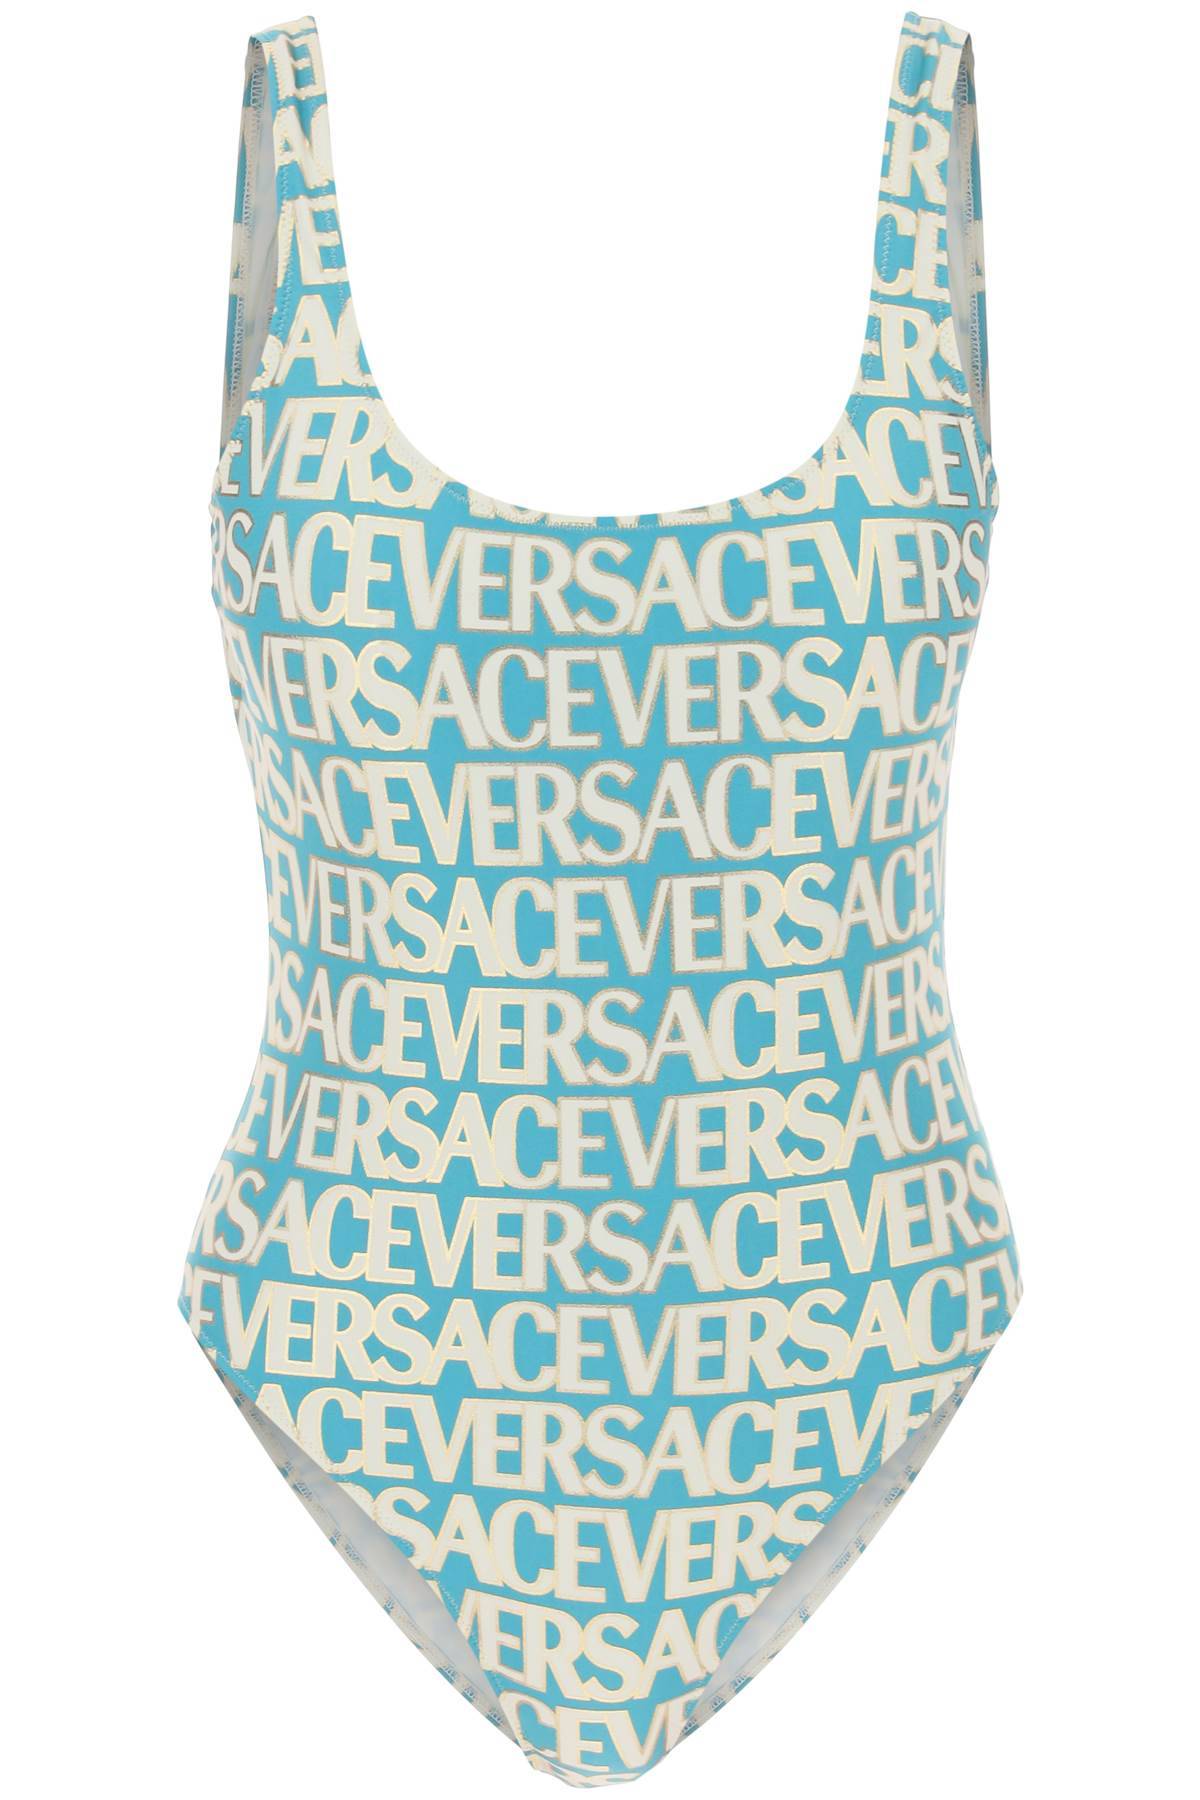 Versace VERSACE versace allover one-piece swimwear